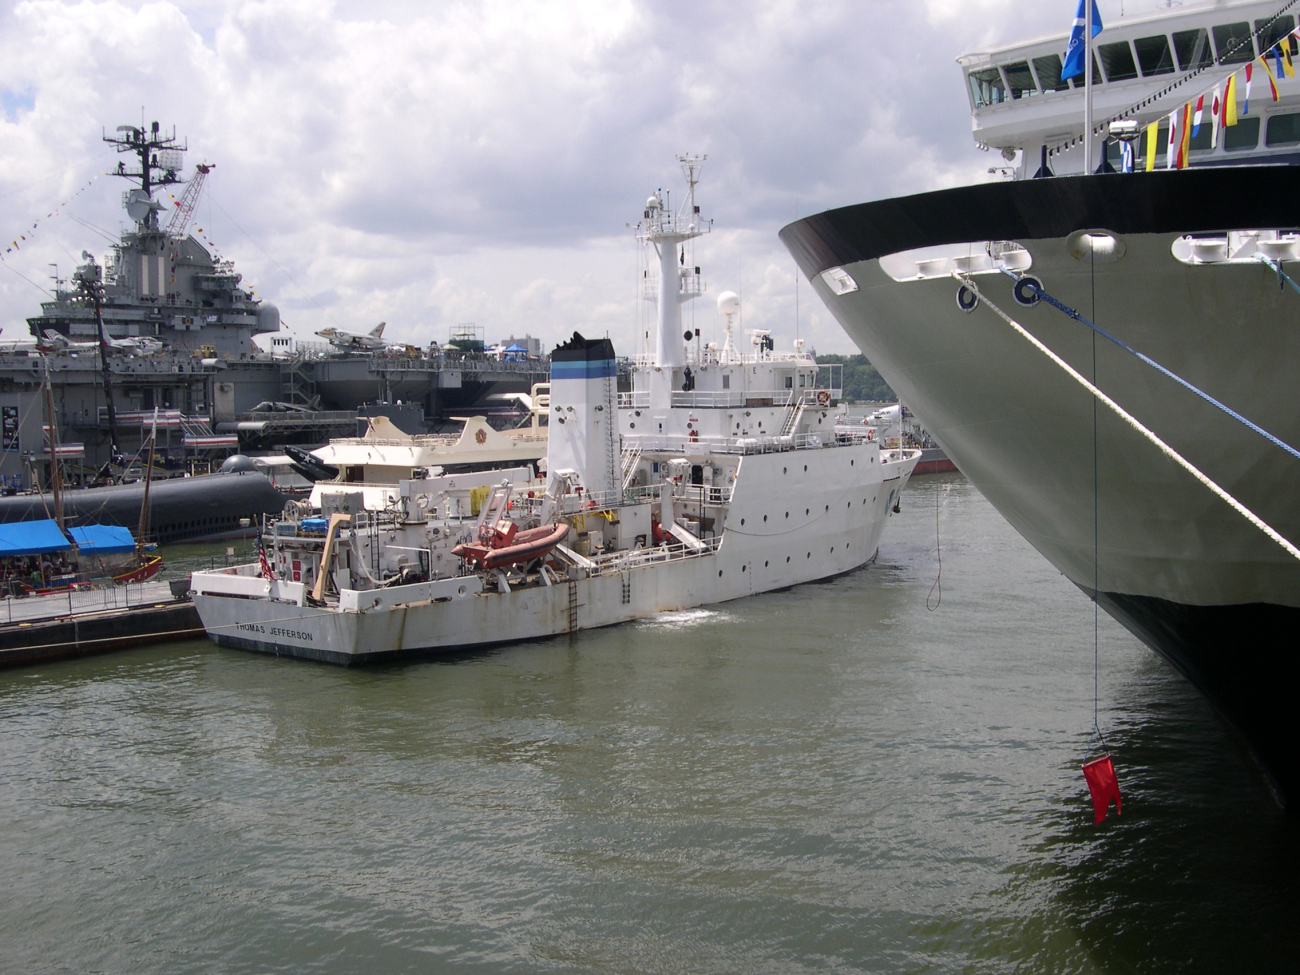 NOAA Ship THOMAS Jefferson tied up next to the USS INTREPID